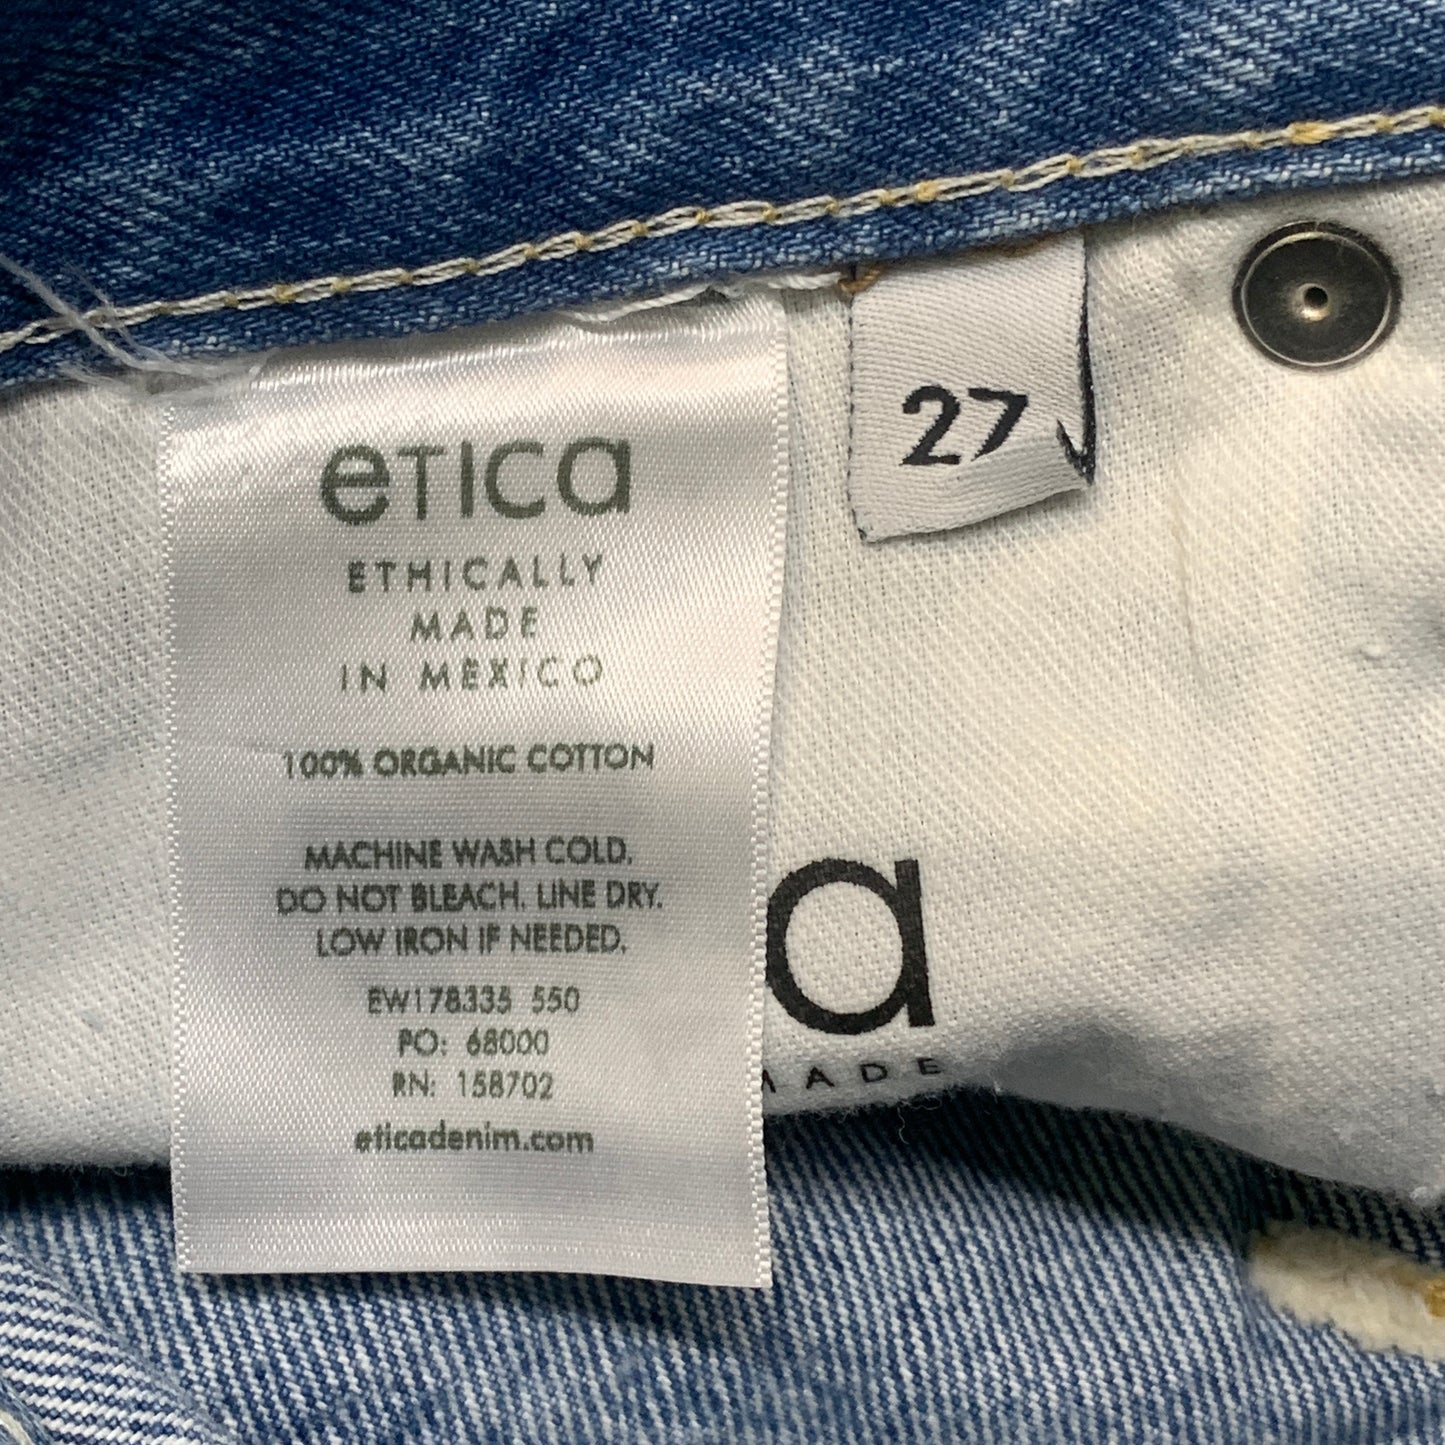 ETICA Fern High Rise Shorts Certified Organic Rip Current Size 27 EW178335